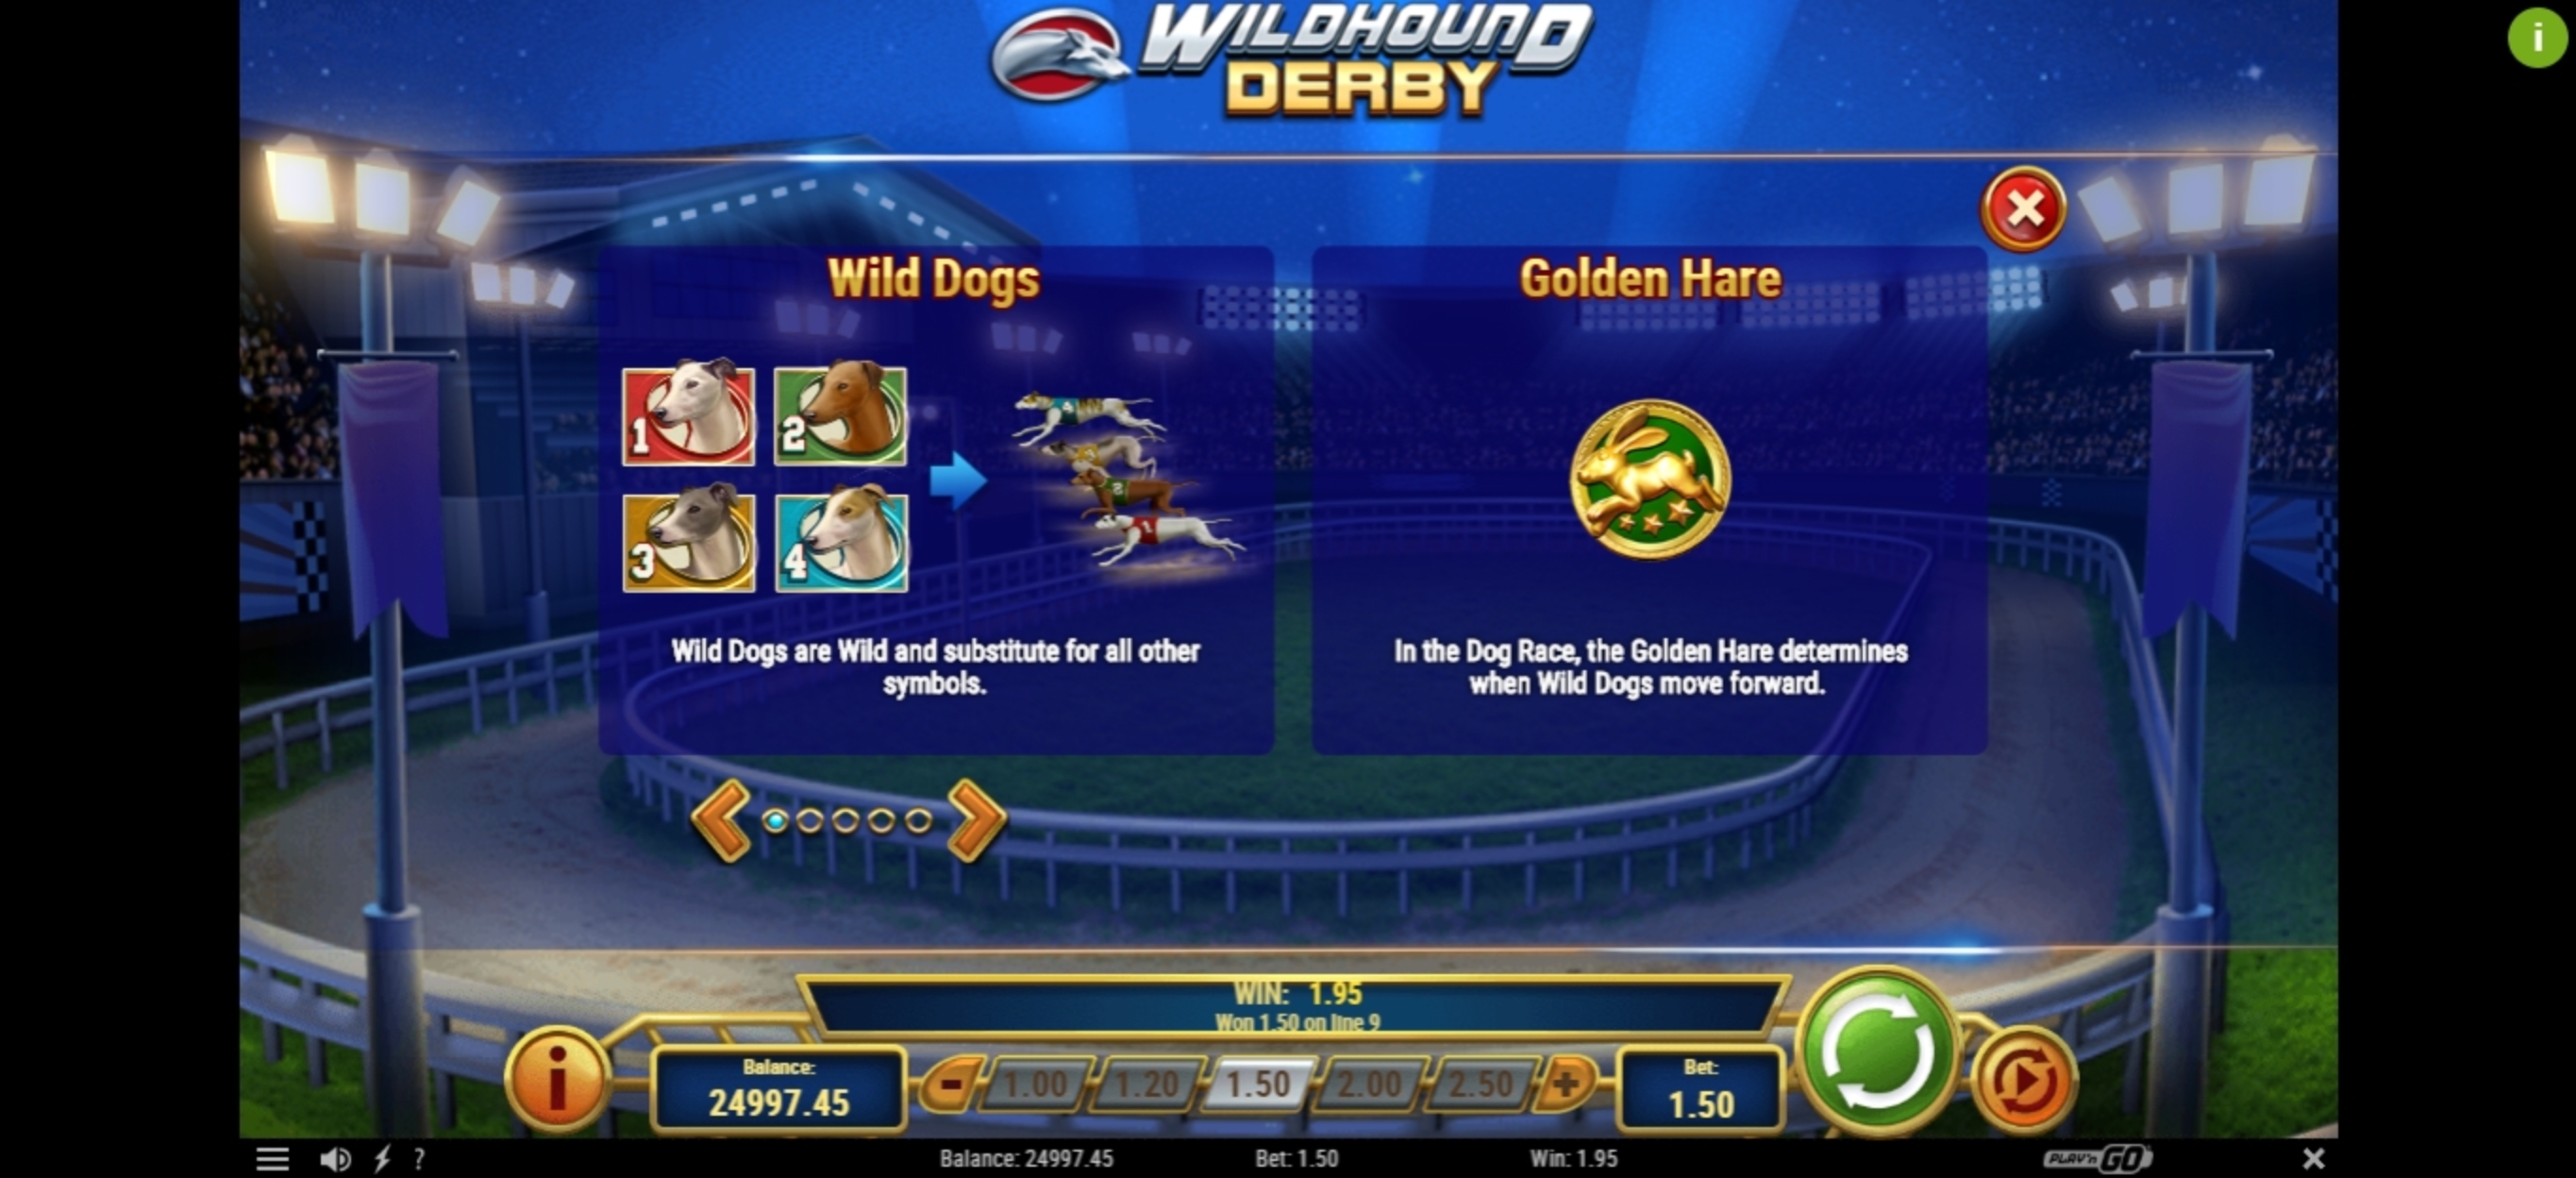 Info of Wildhound Derby Slot Game by Playn GO